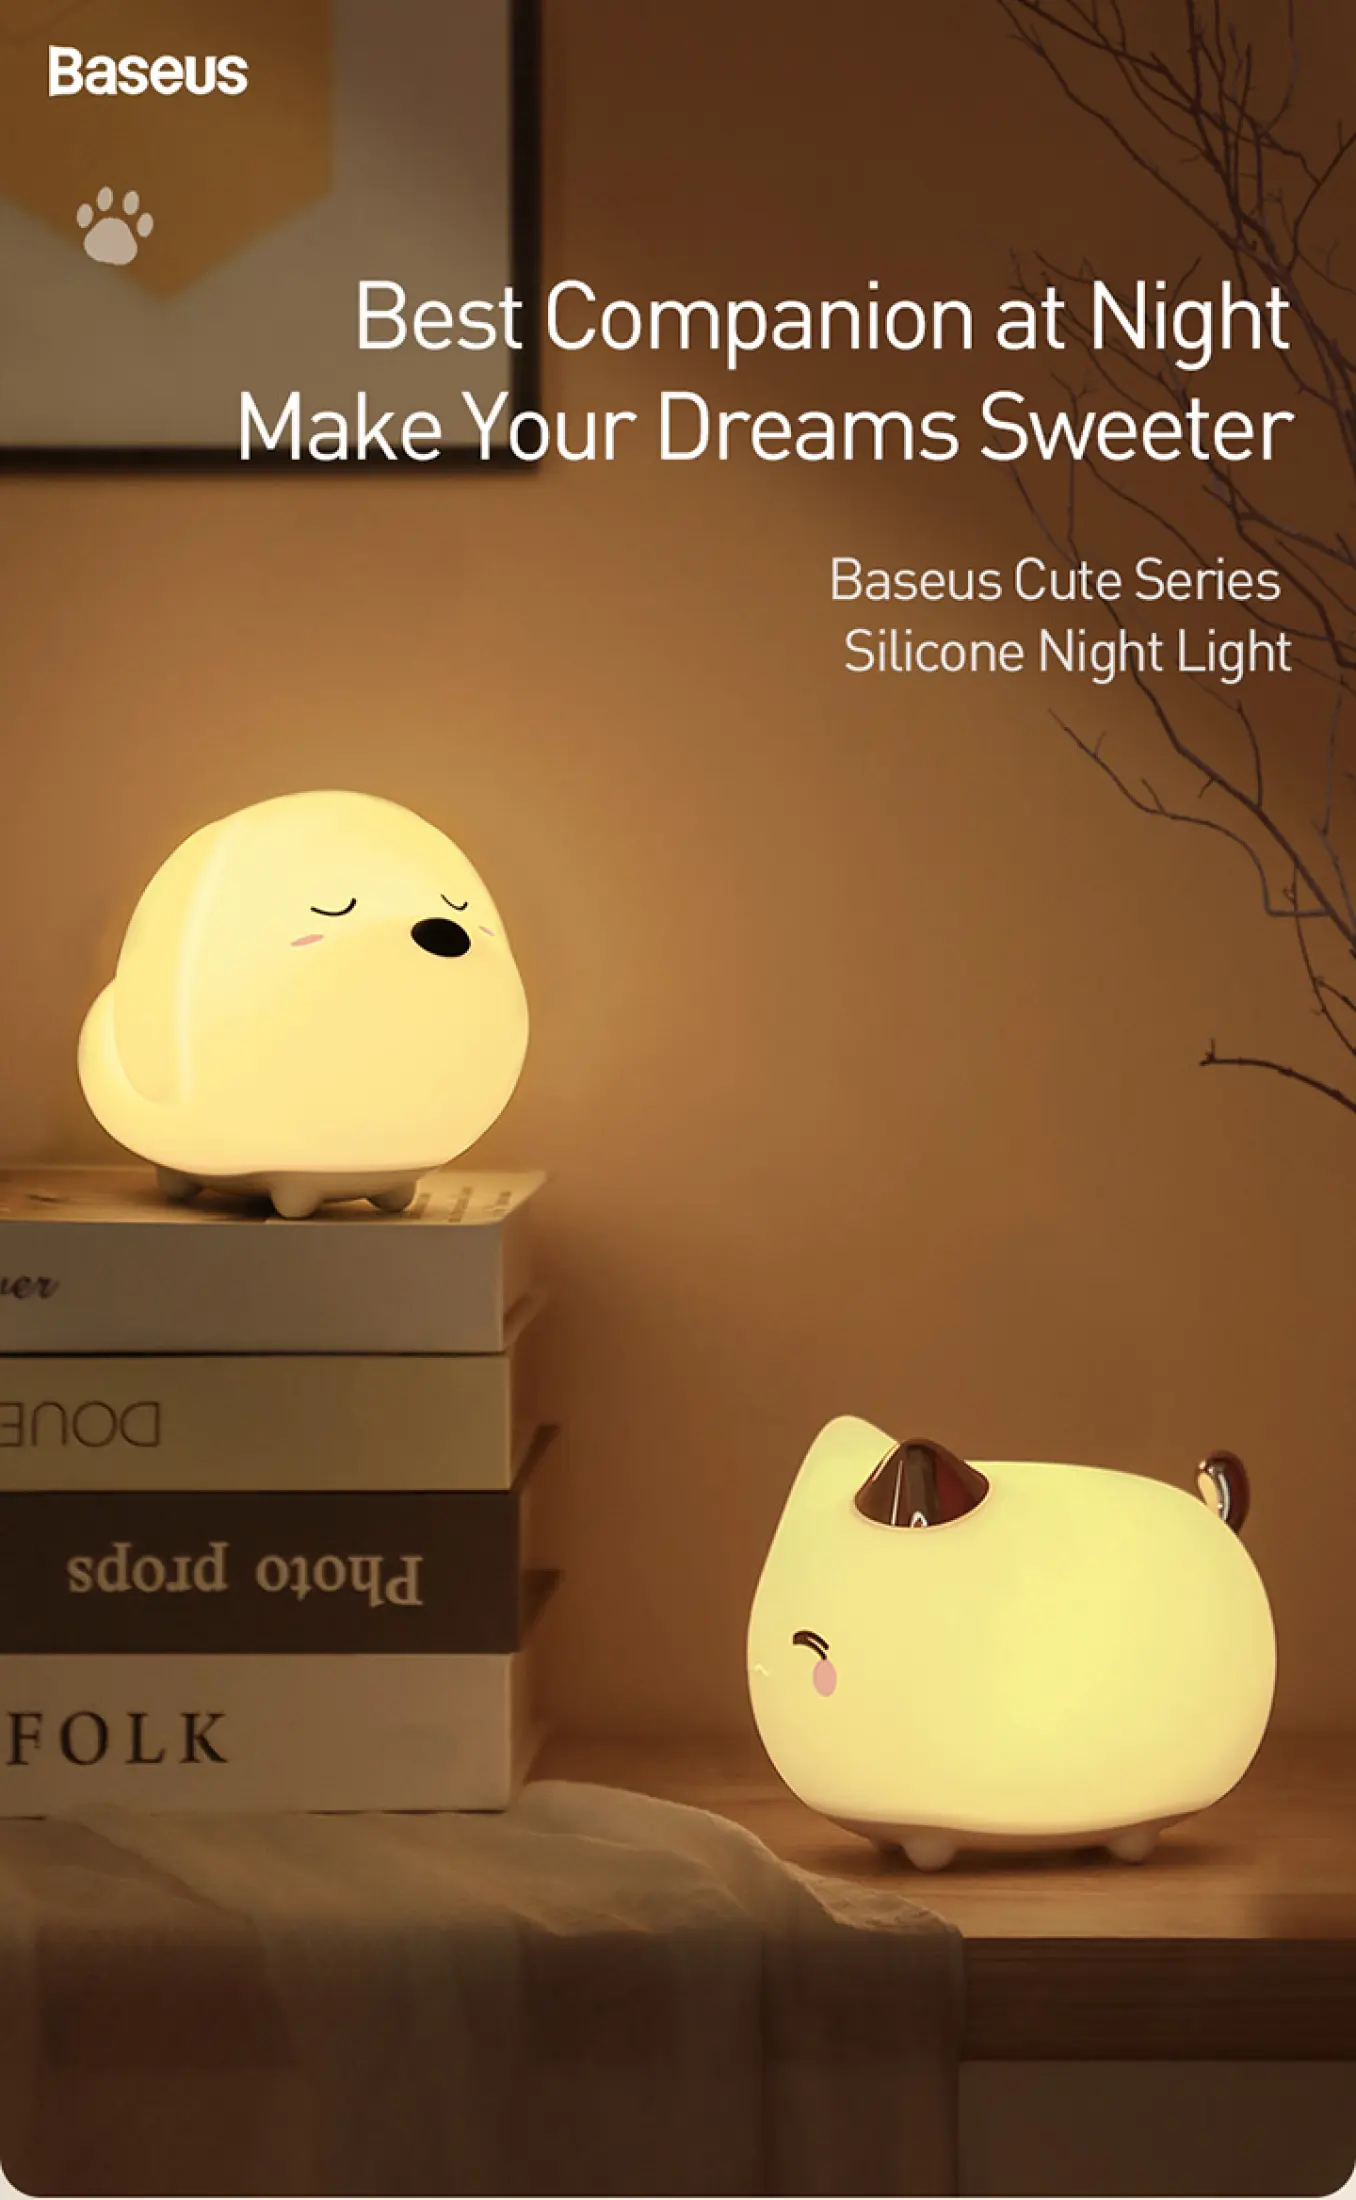 Baseus Cute Cat Silicone 1100mAh Night Light Modes buy online best price in pakistan